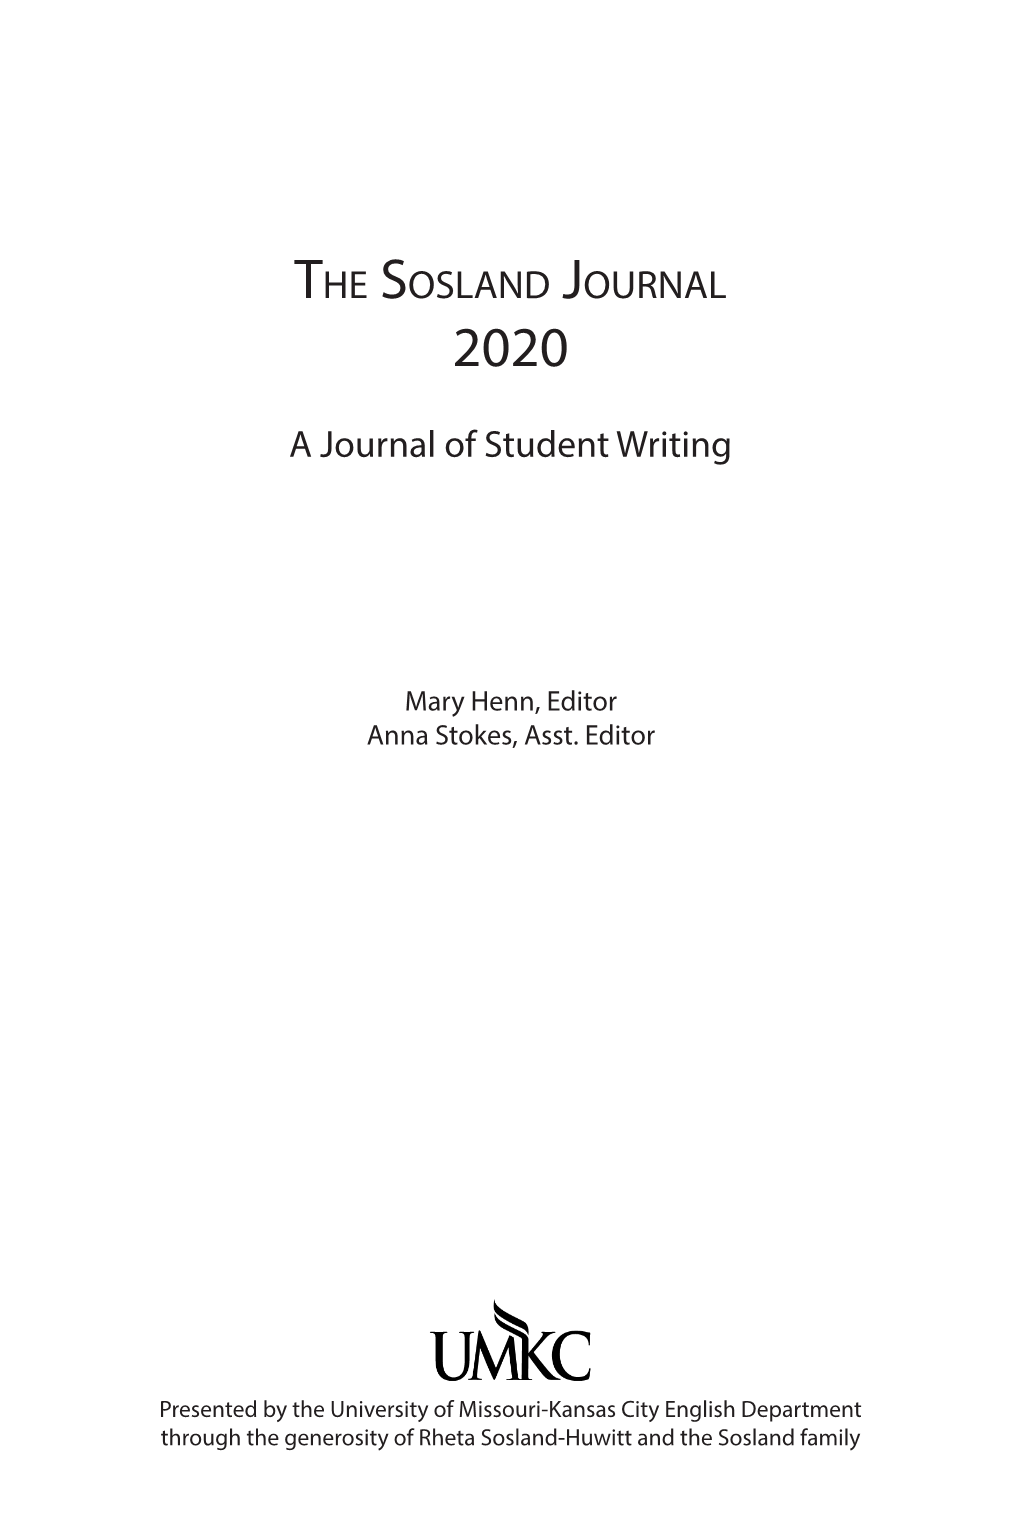 The Sosland Journal 2020